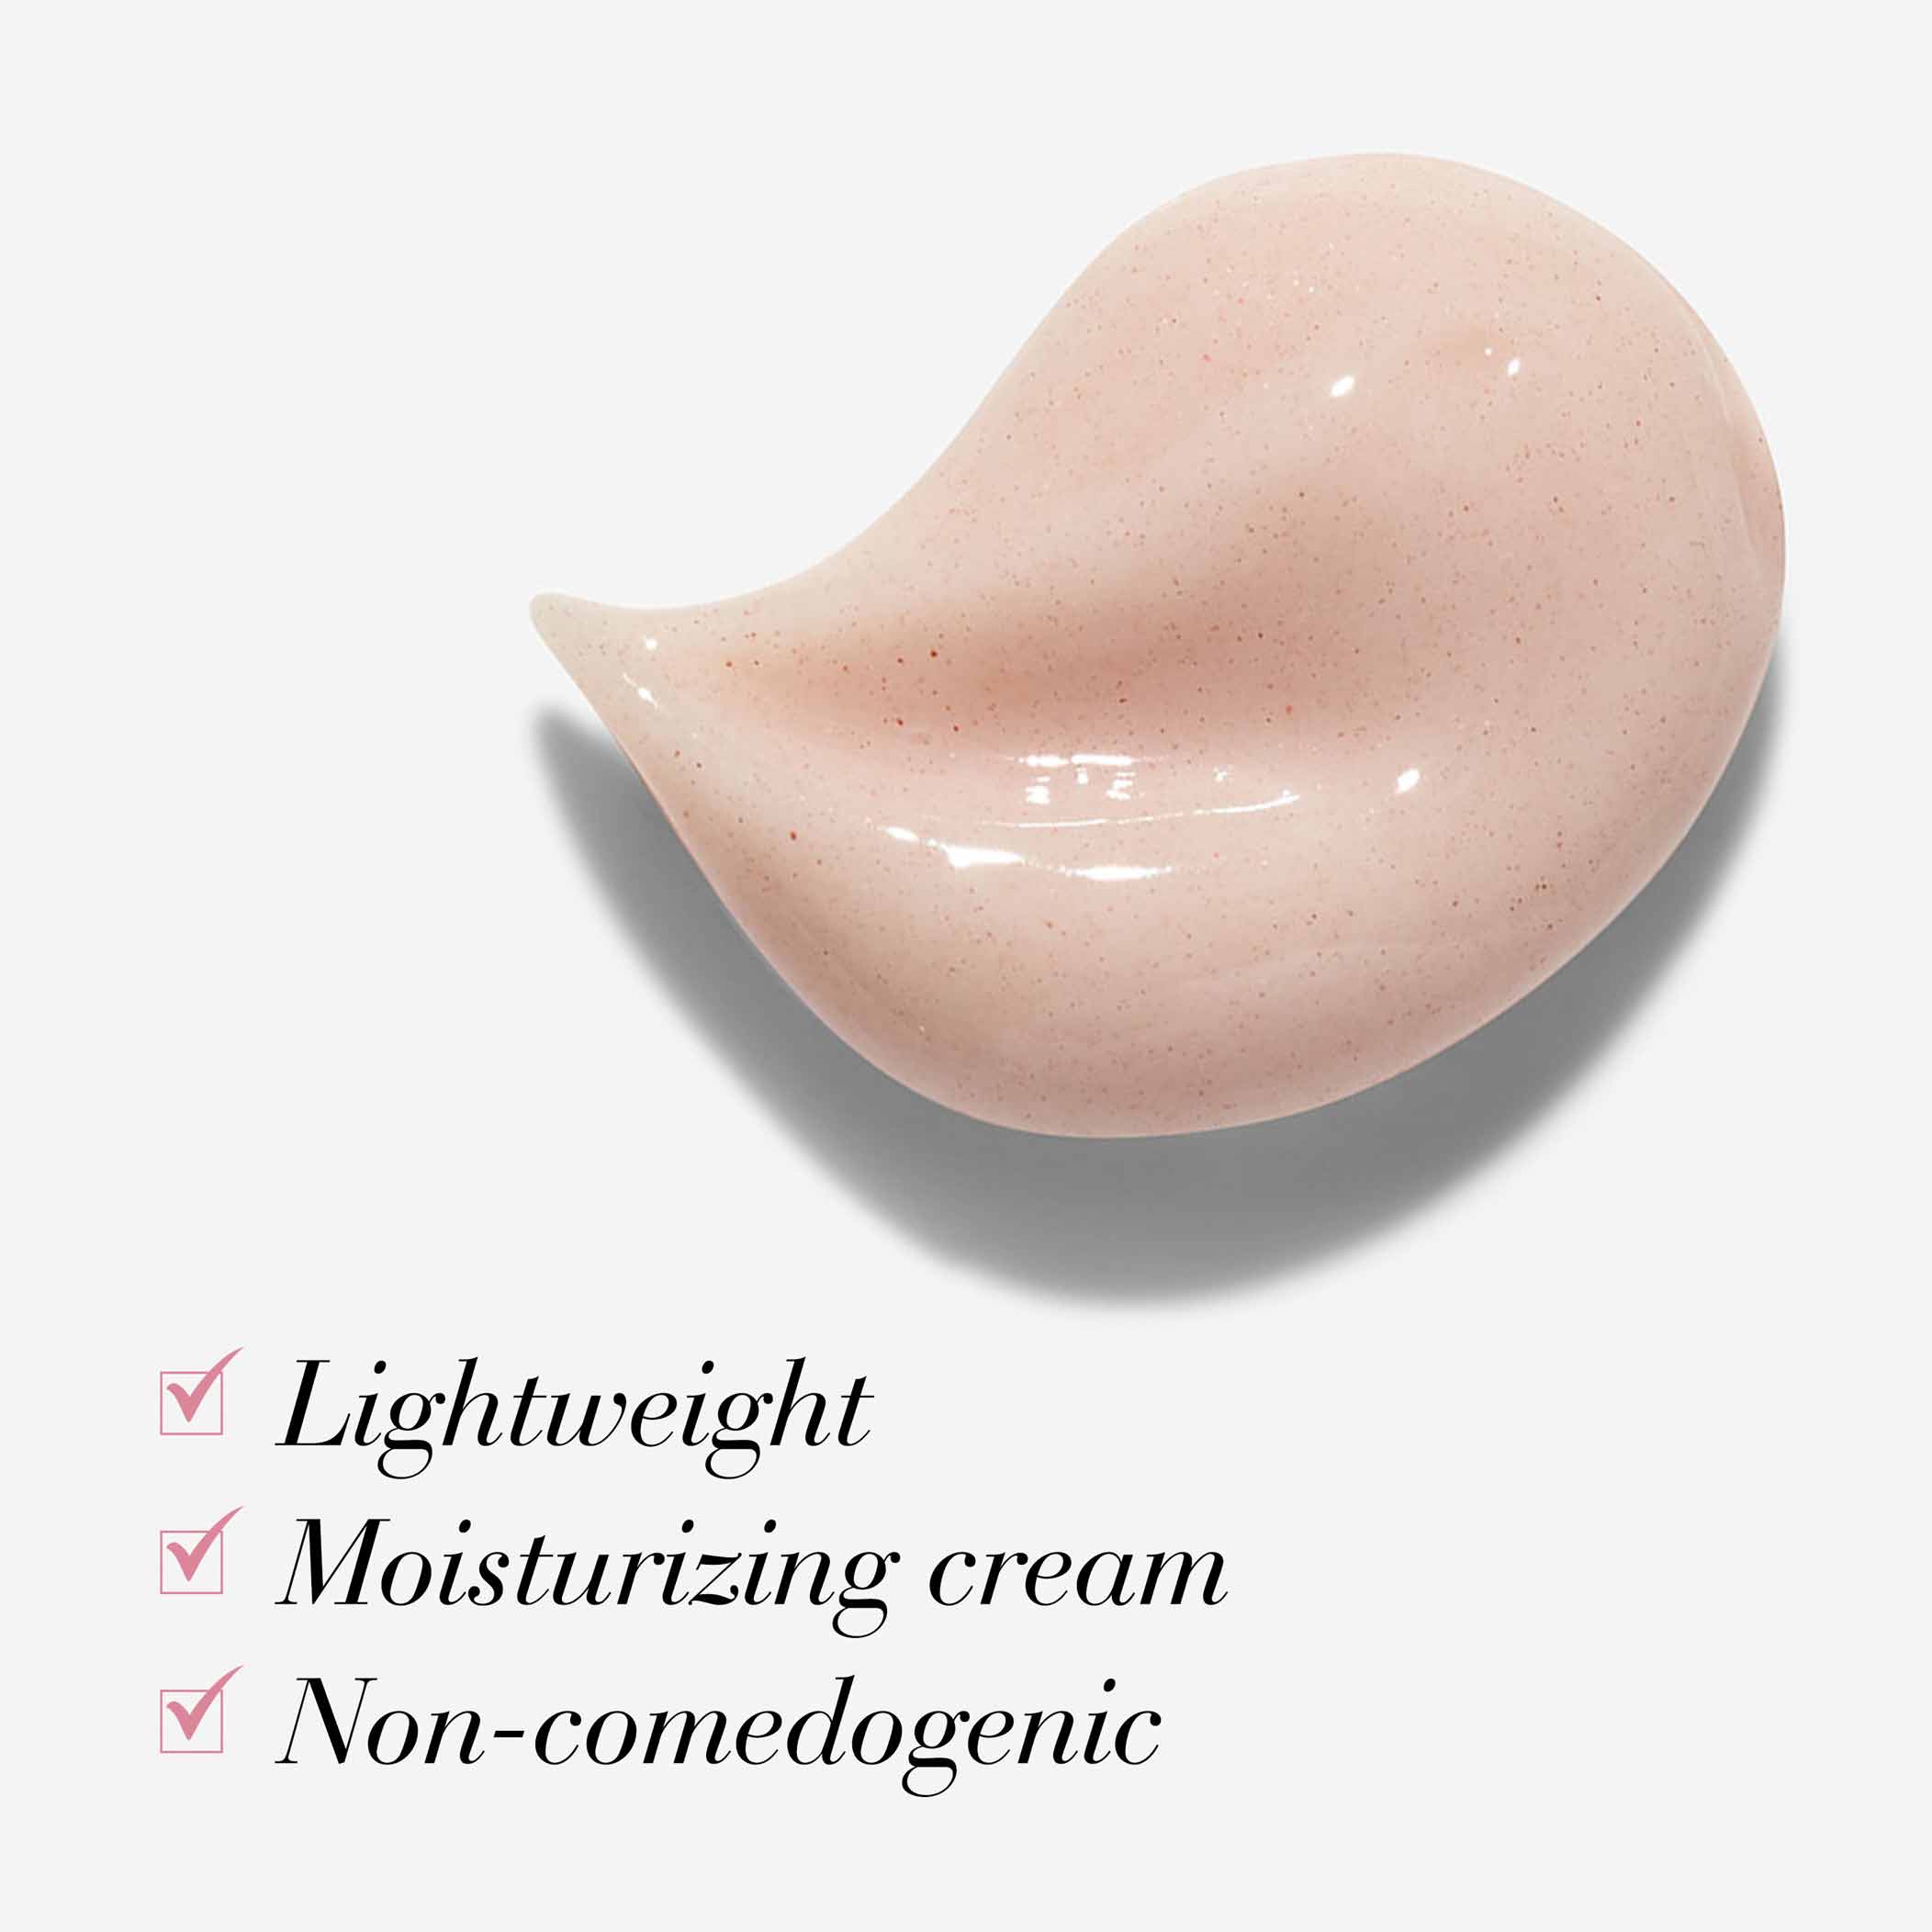 Retinol + HPR Ceramide Rapid Skin-Renewing Water Cream benefits. Lightweight, moisturizing cream, non-comedogenic formula. Large Image.